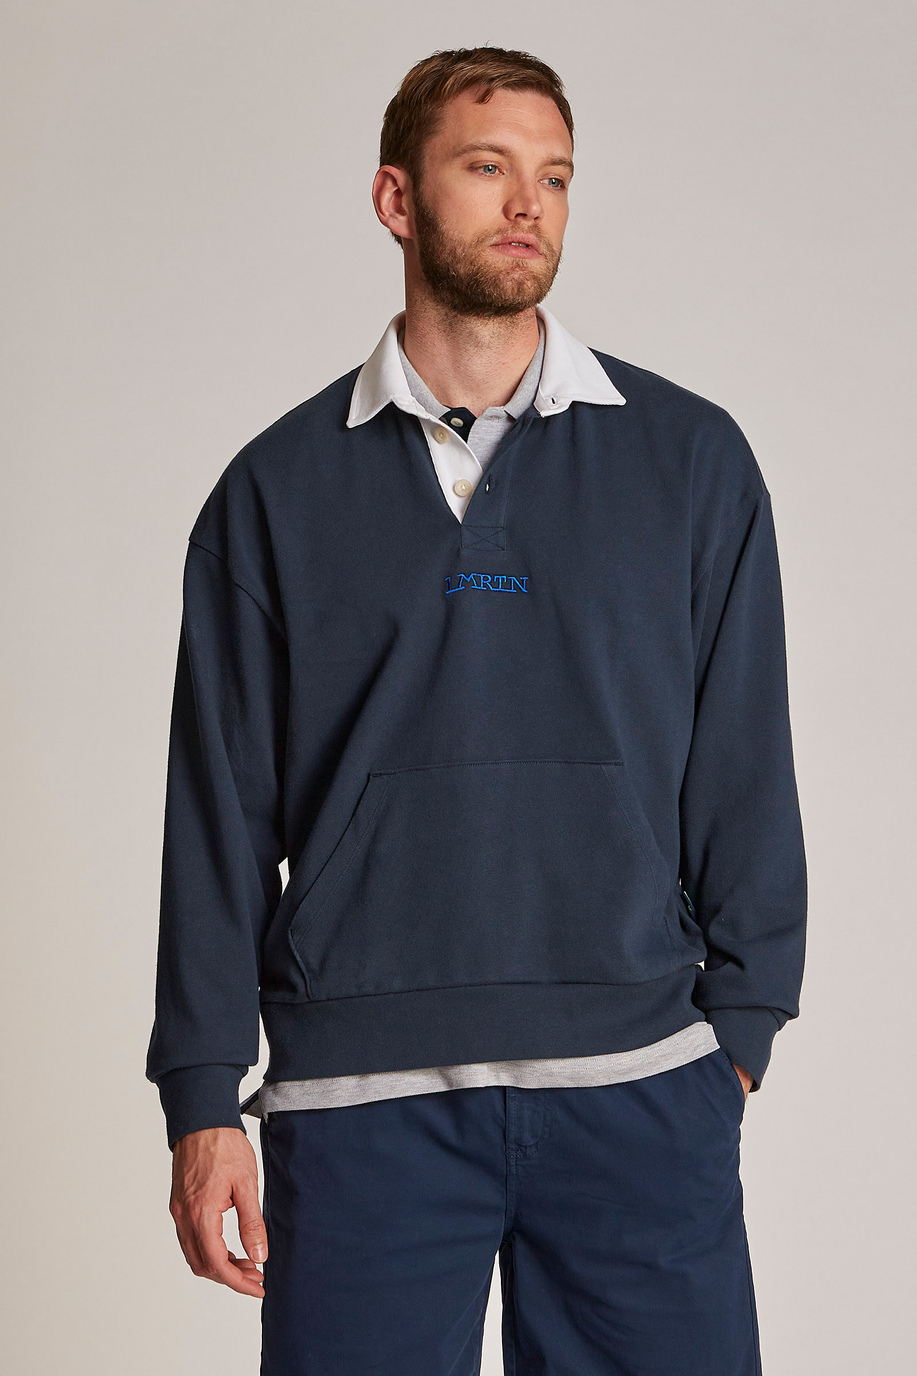 Men's oversized 100% cotton sweatshirt featuring a contrasting collar - Preview  | La Martina - Official Online Shop